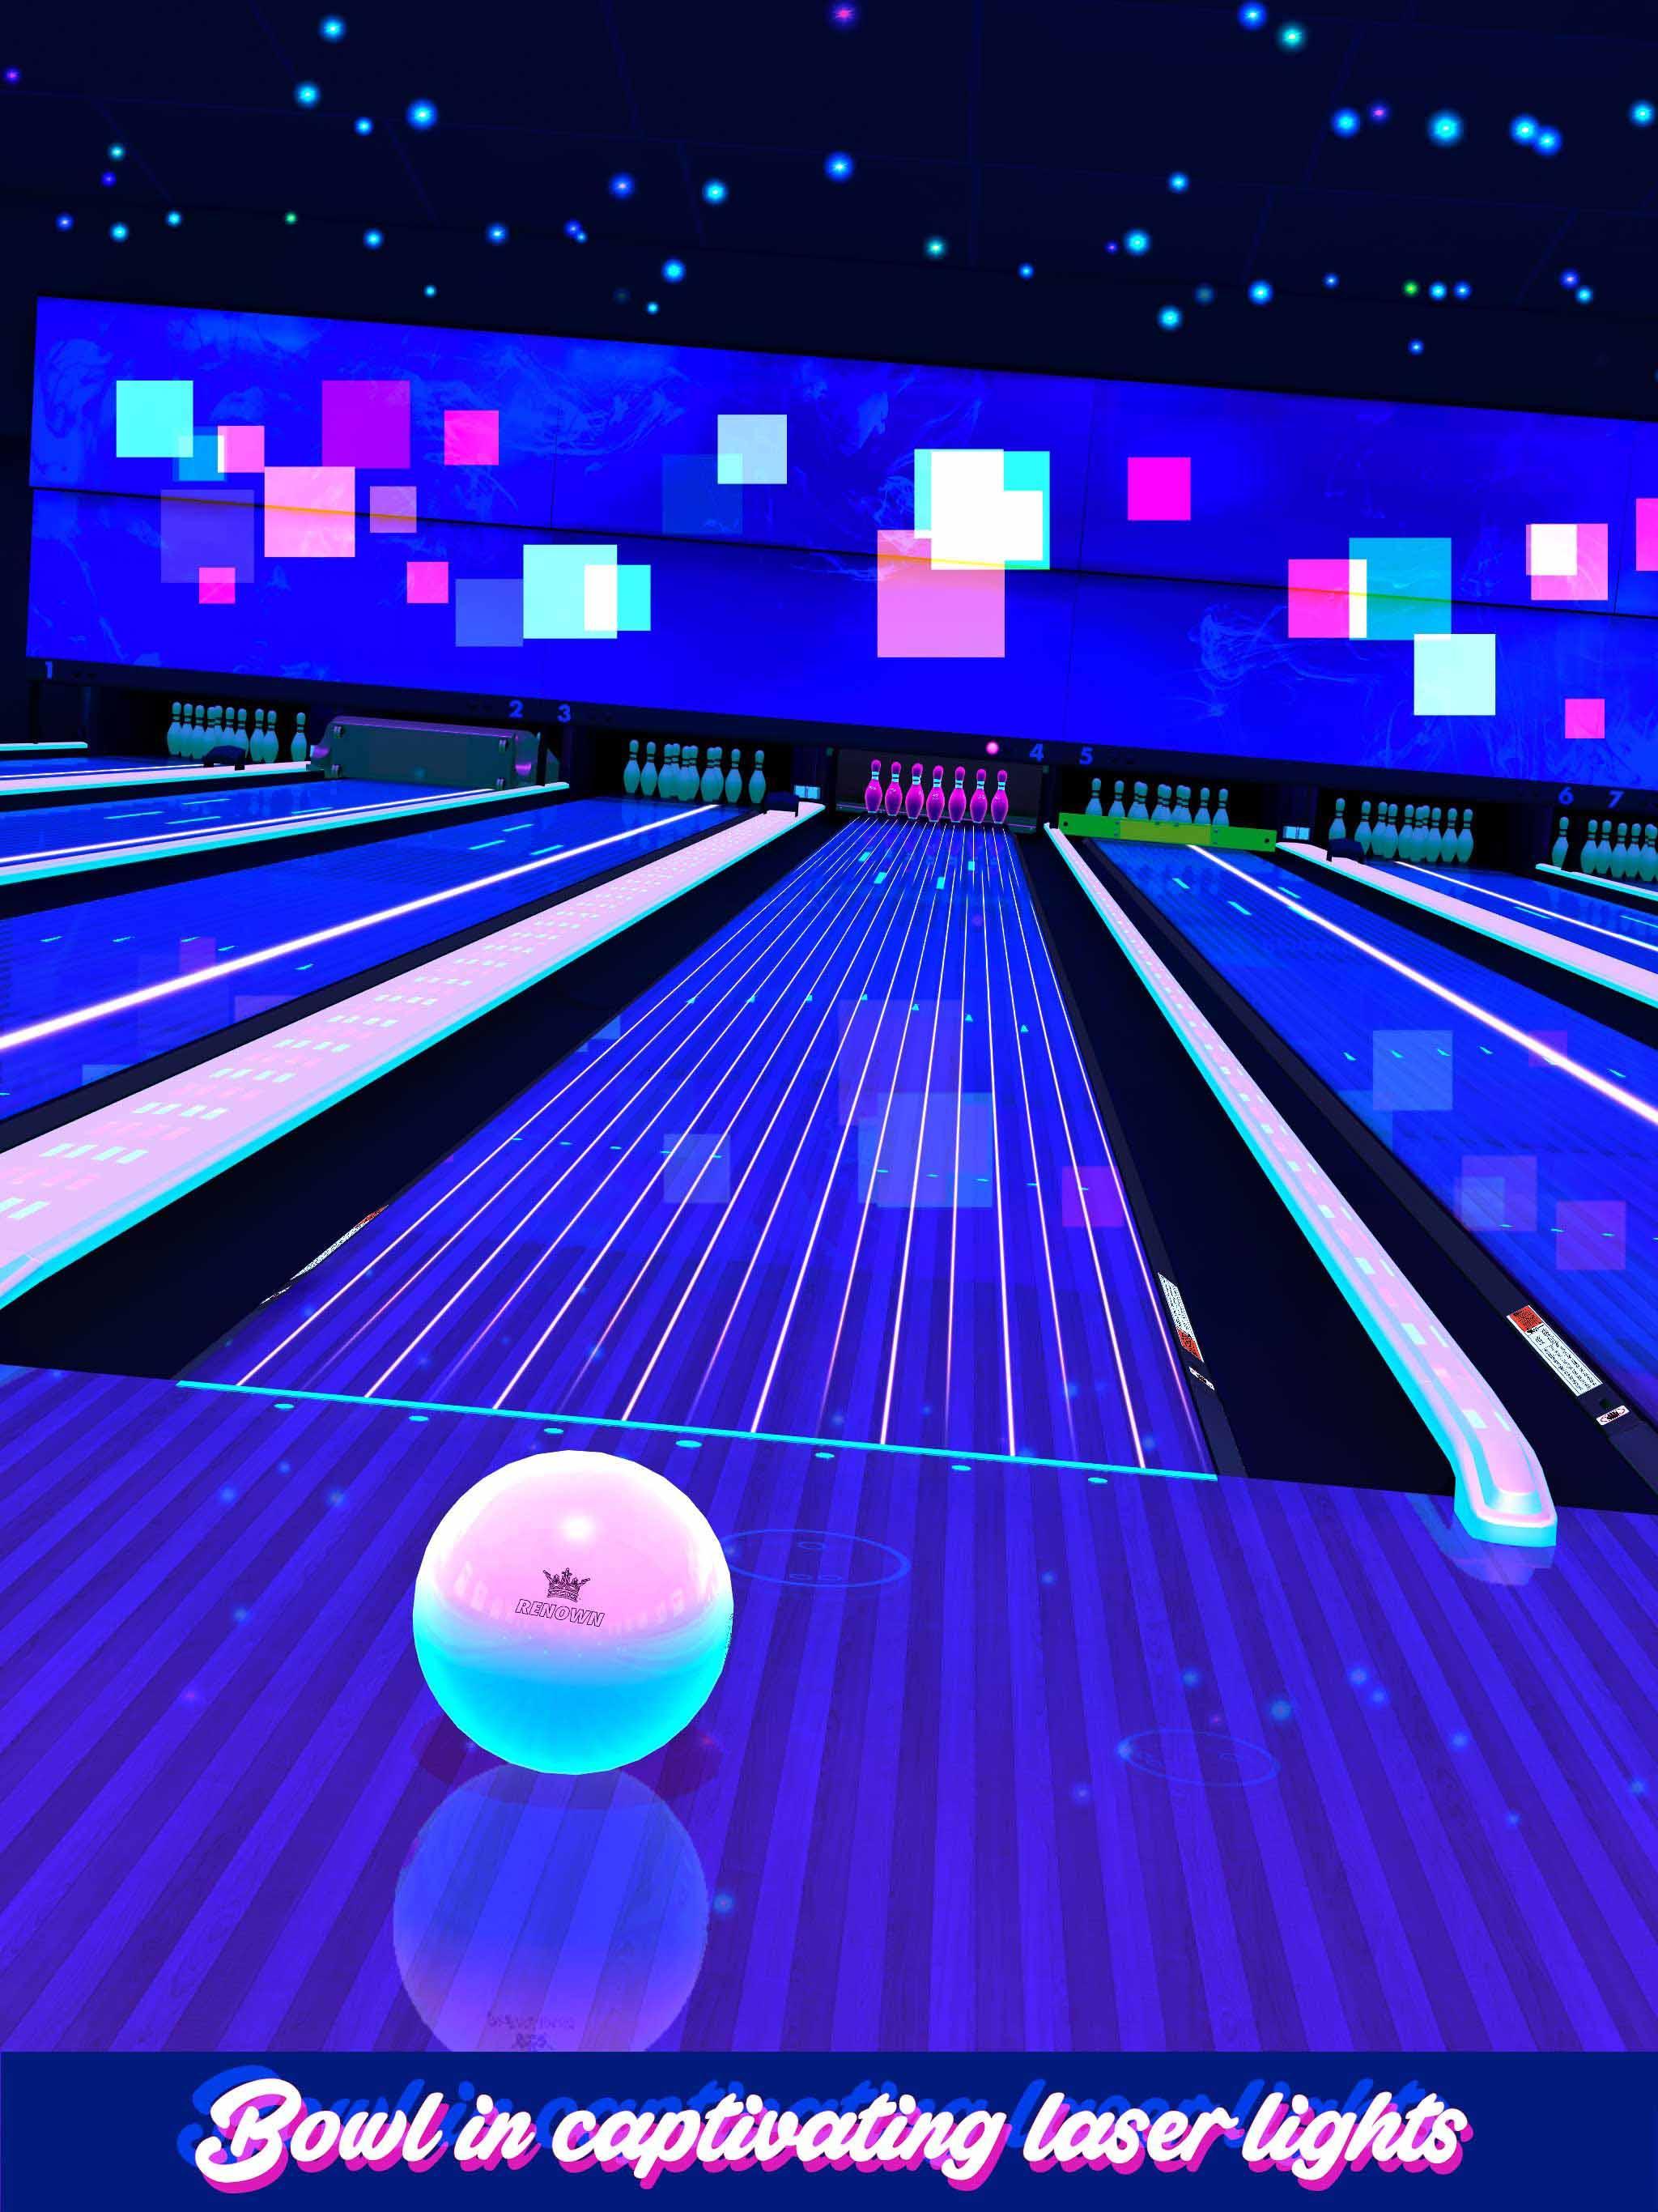 Bowling Go! - Best Realistic 10 Pin Bowling Games 0.3.0.1512 Screenshot 13